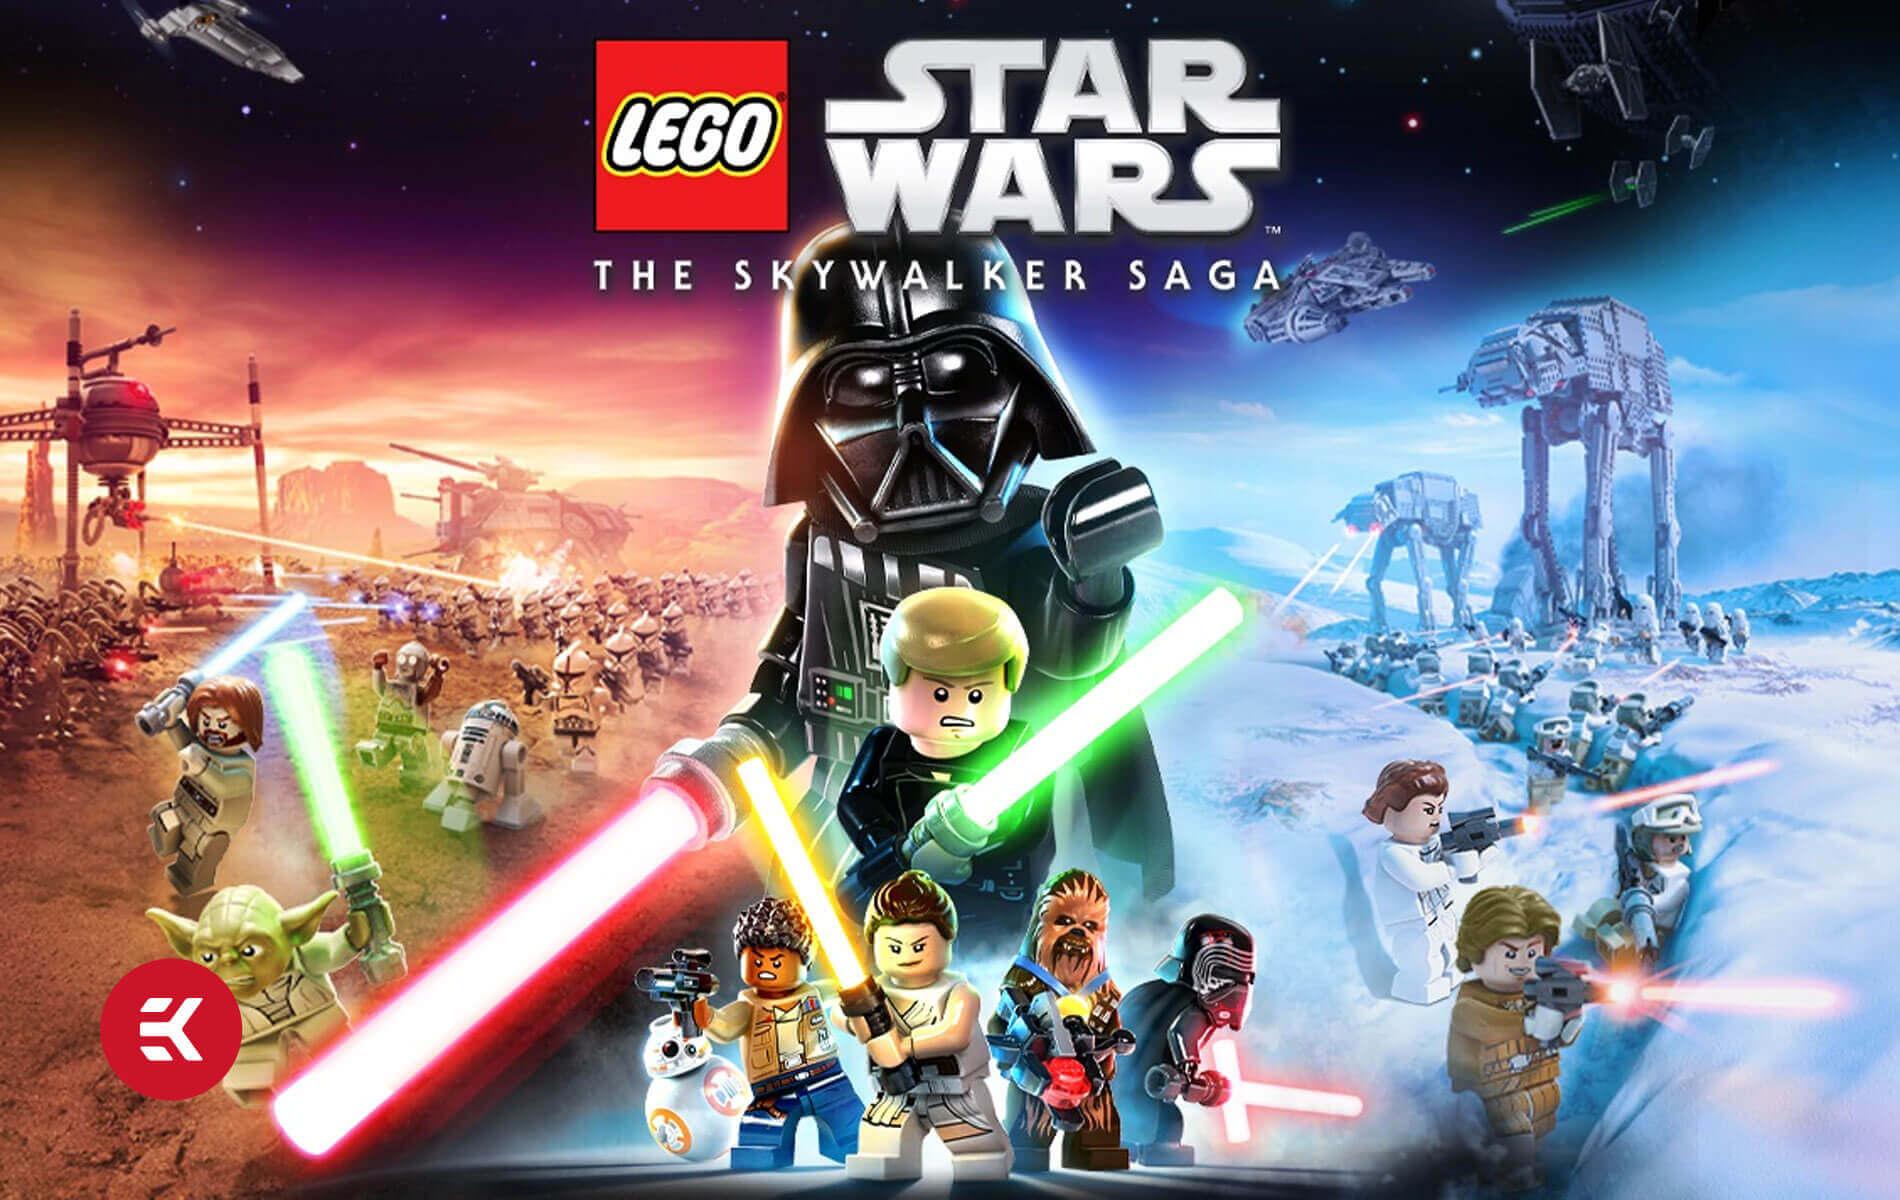 Can I Play LEGO Star Wars: The Skywalker Saga on PC?